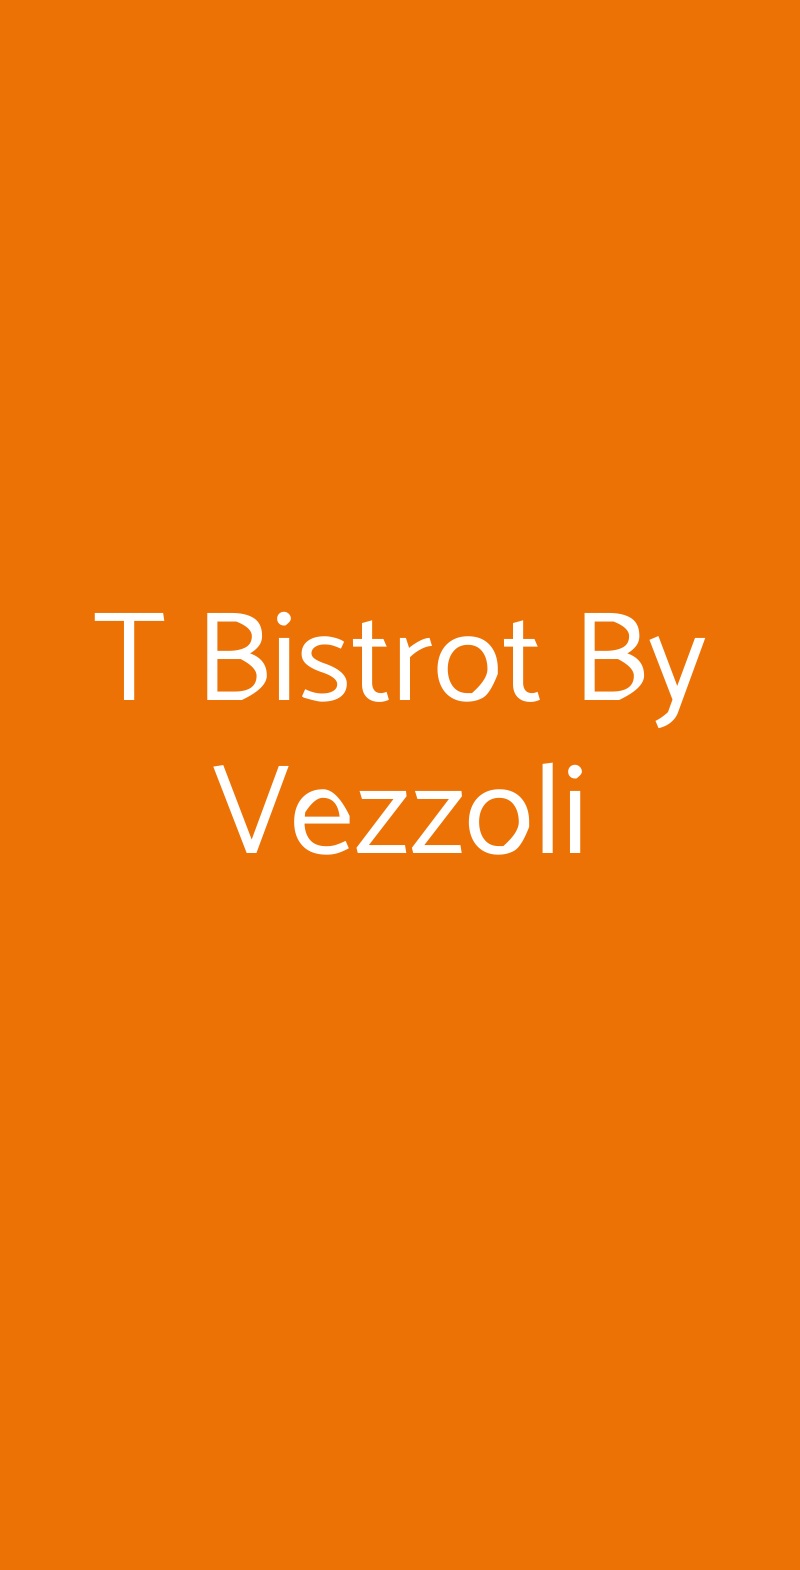 T Bistrot By Vezzoli Milano menù 1 pagina